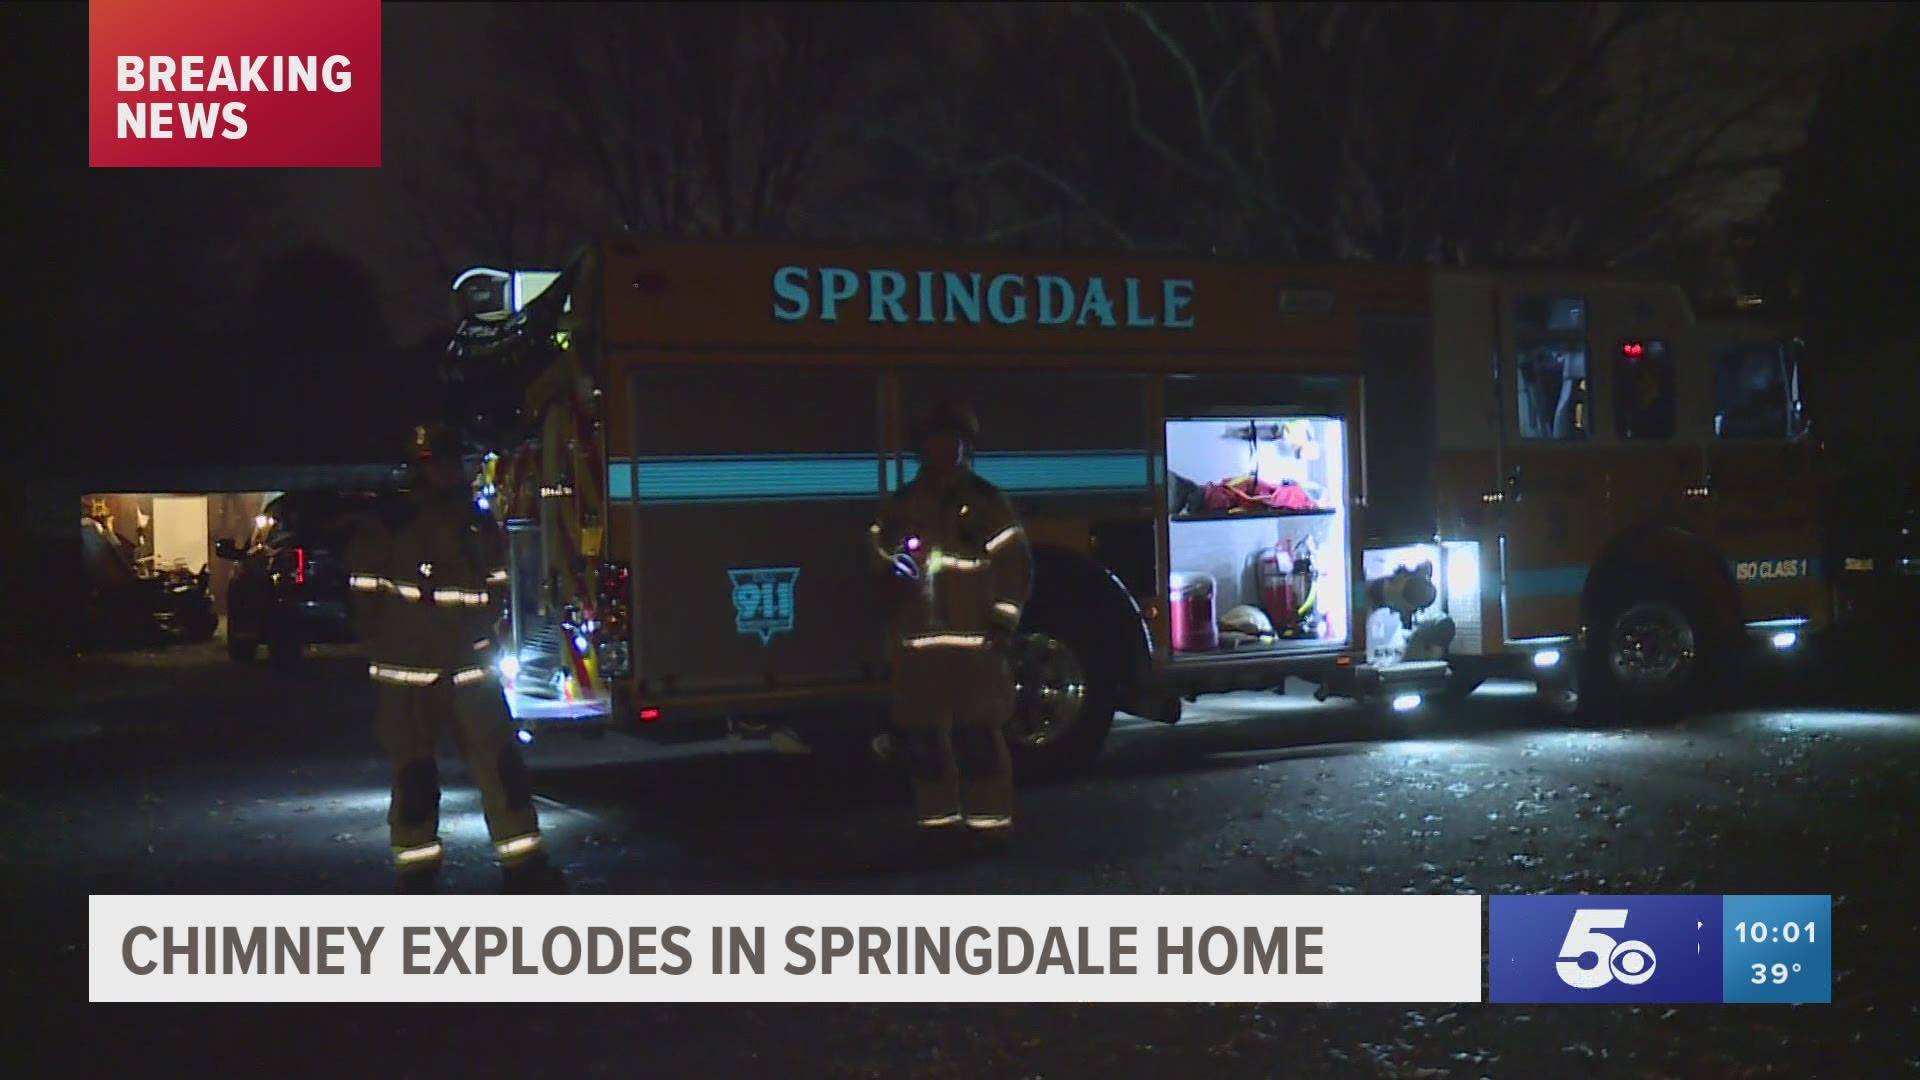 Chimney explodes in Springdale home, no injuries